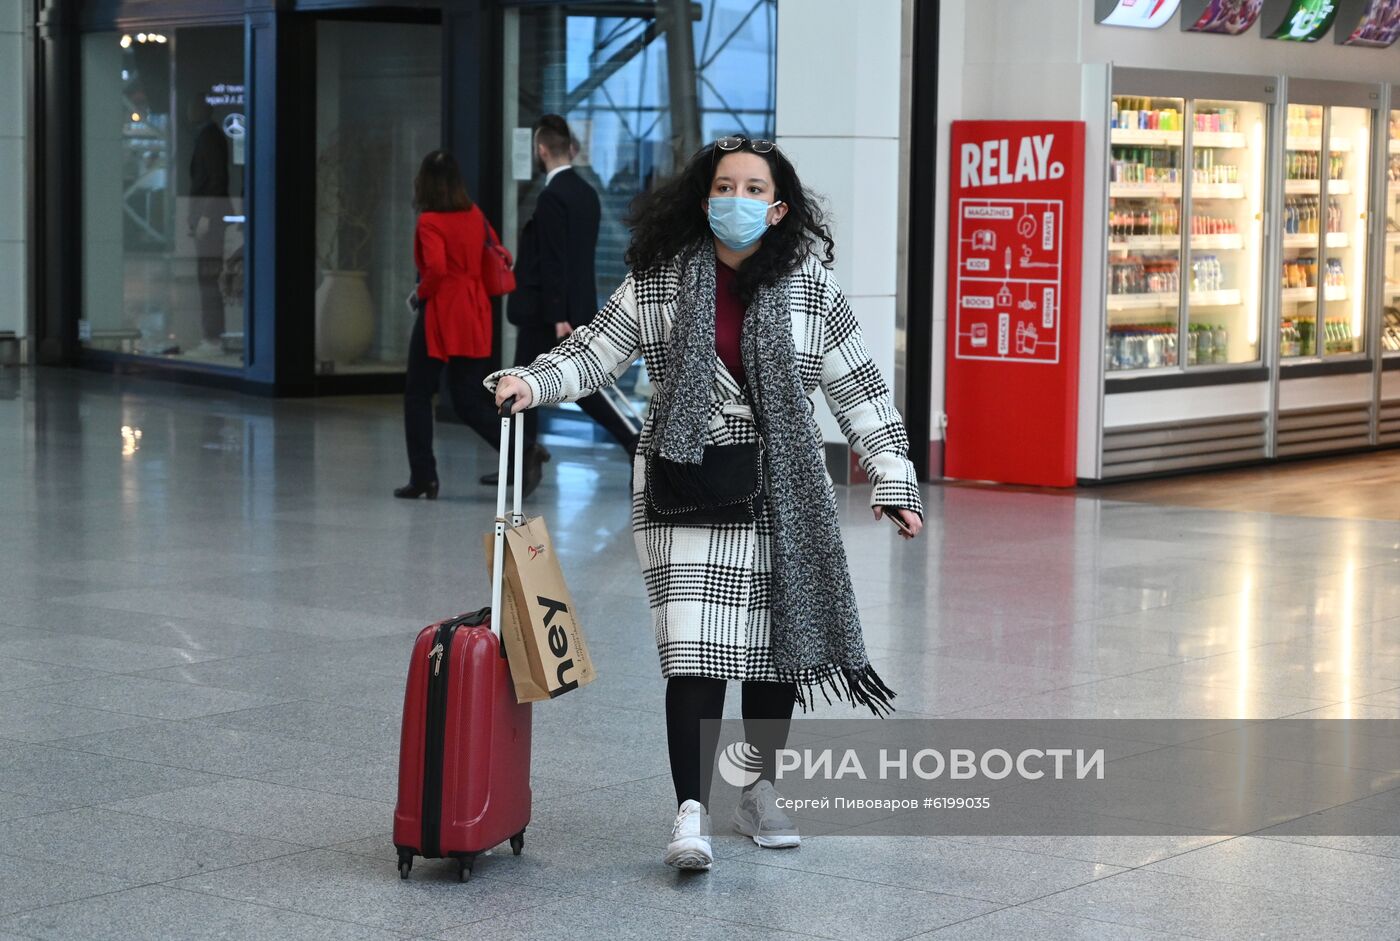 Ситуация в аэропорту Брюсселя в связи с коронавирусом